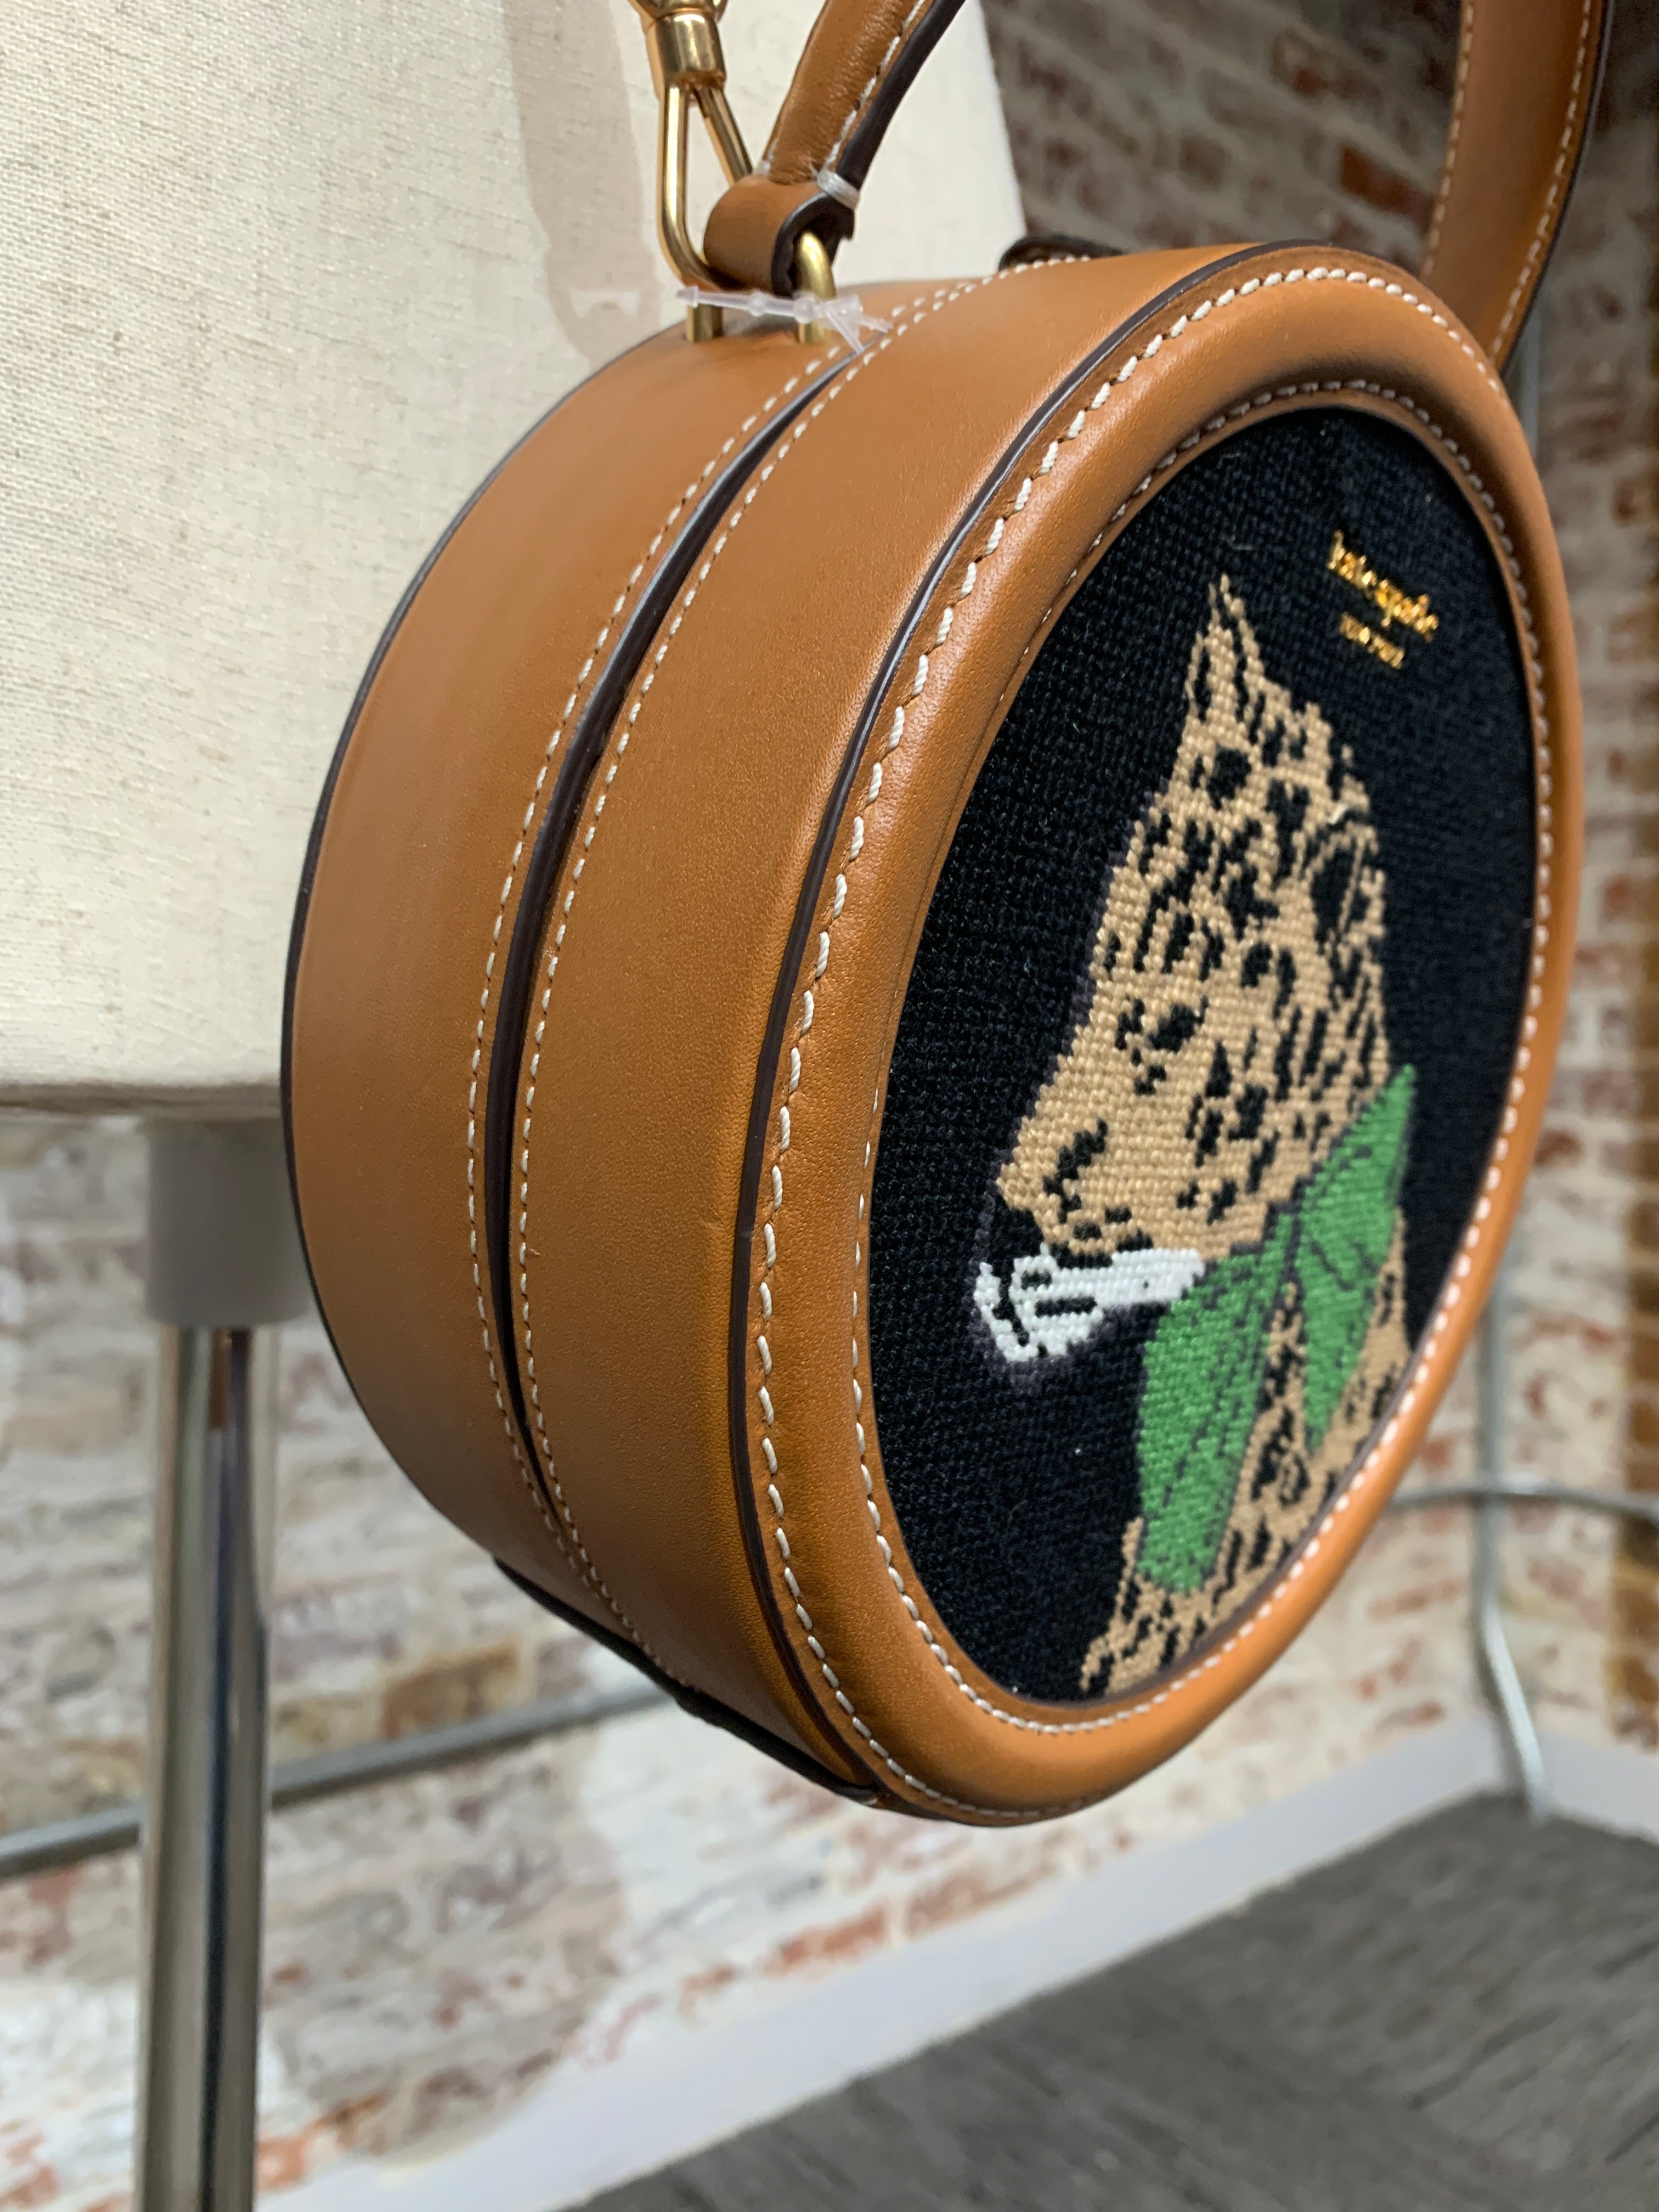 Kate Spade Cheetah Crossbody Messenger Bag for Sale in Santa Ana, CA -  OfferUp